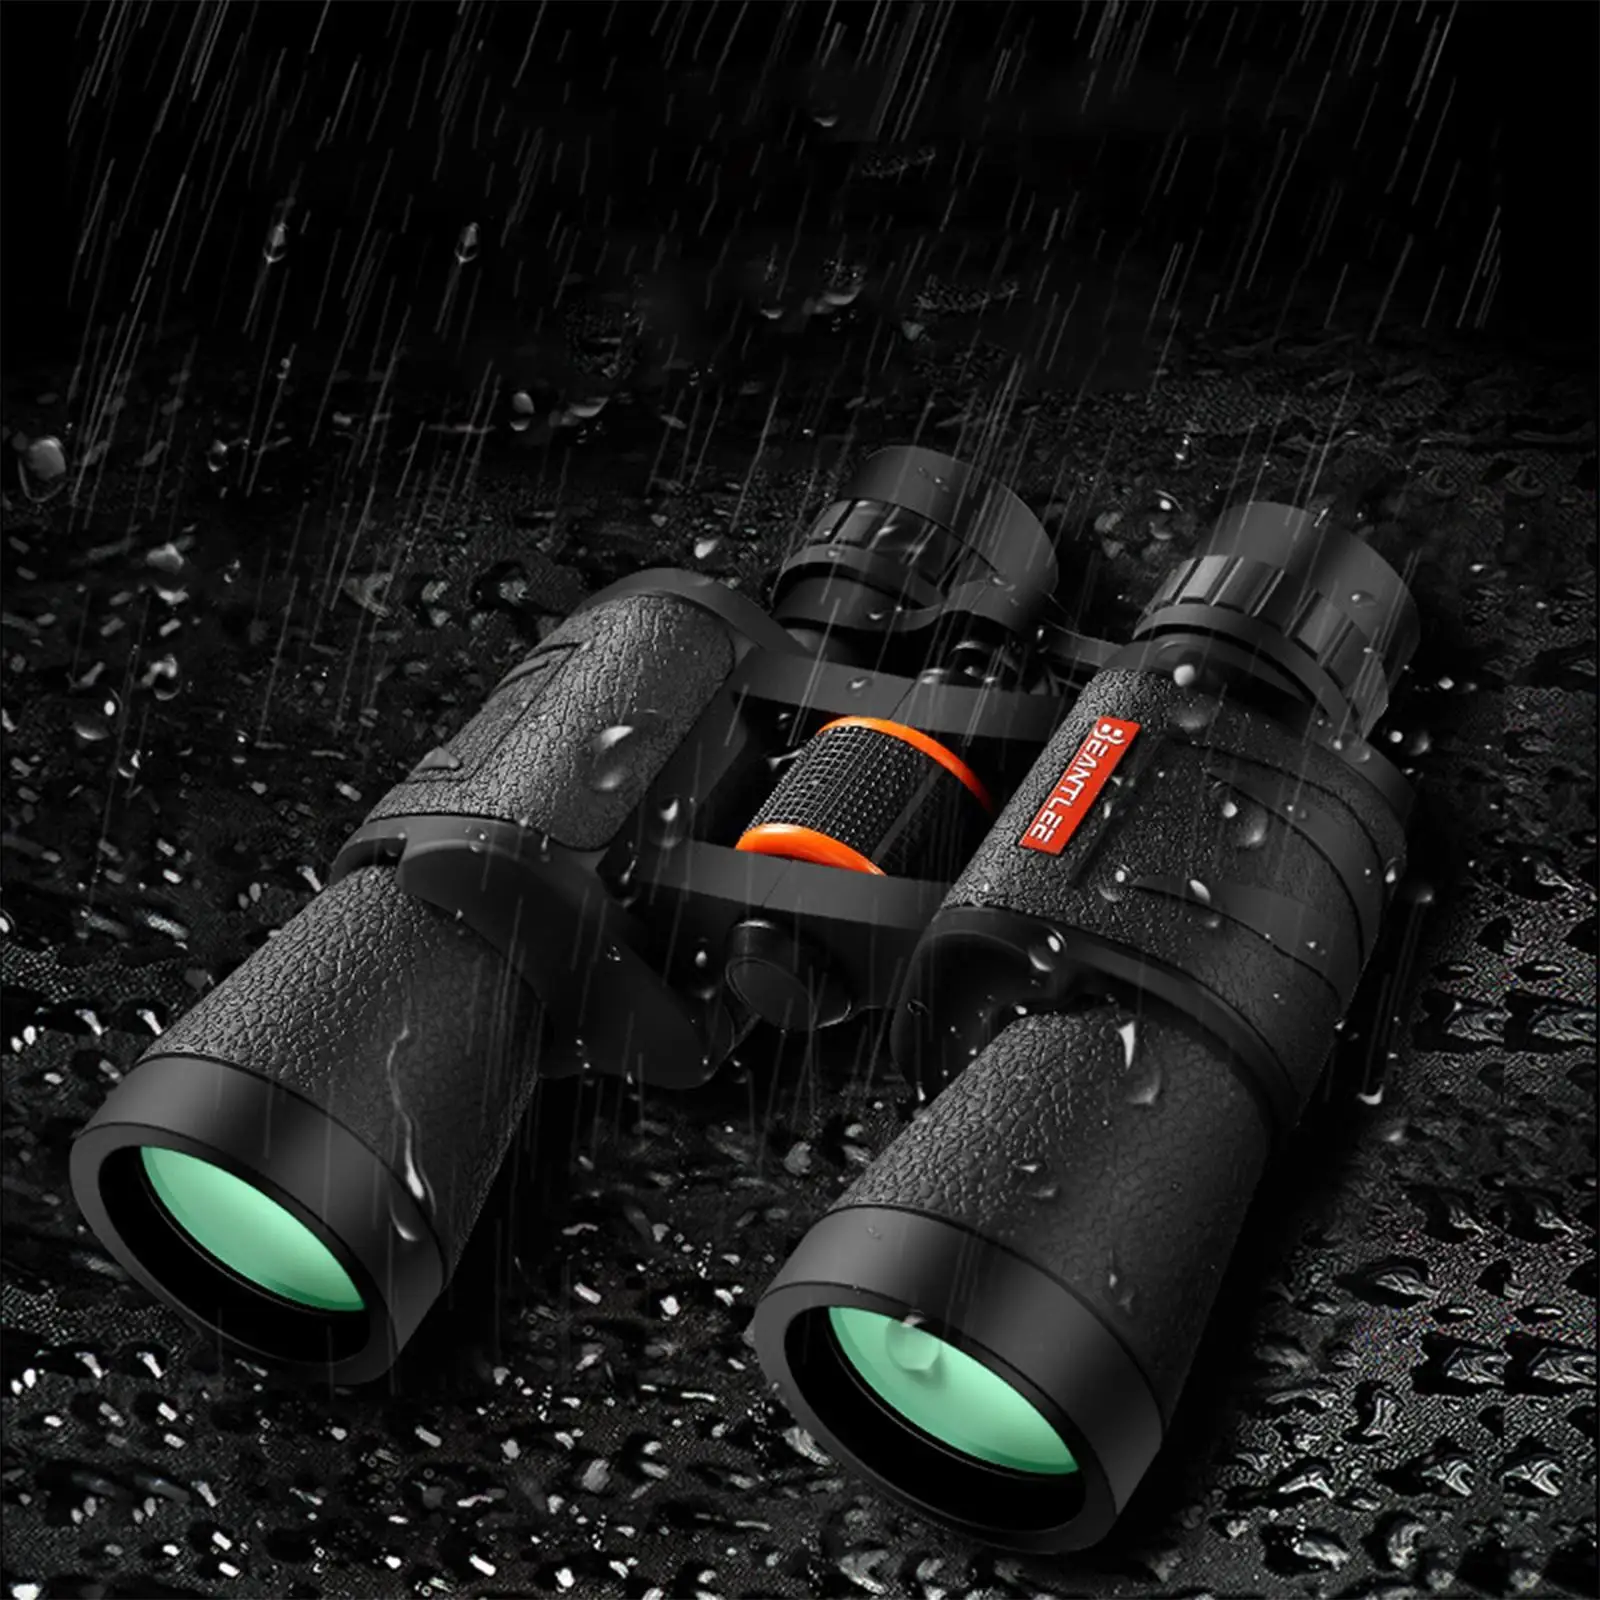 20x50 Binoculars for Adults Bak4  Fmc Lens HD for Bird Watching Travel